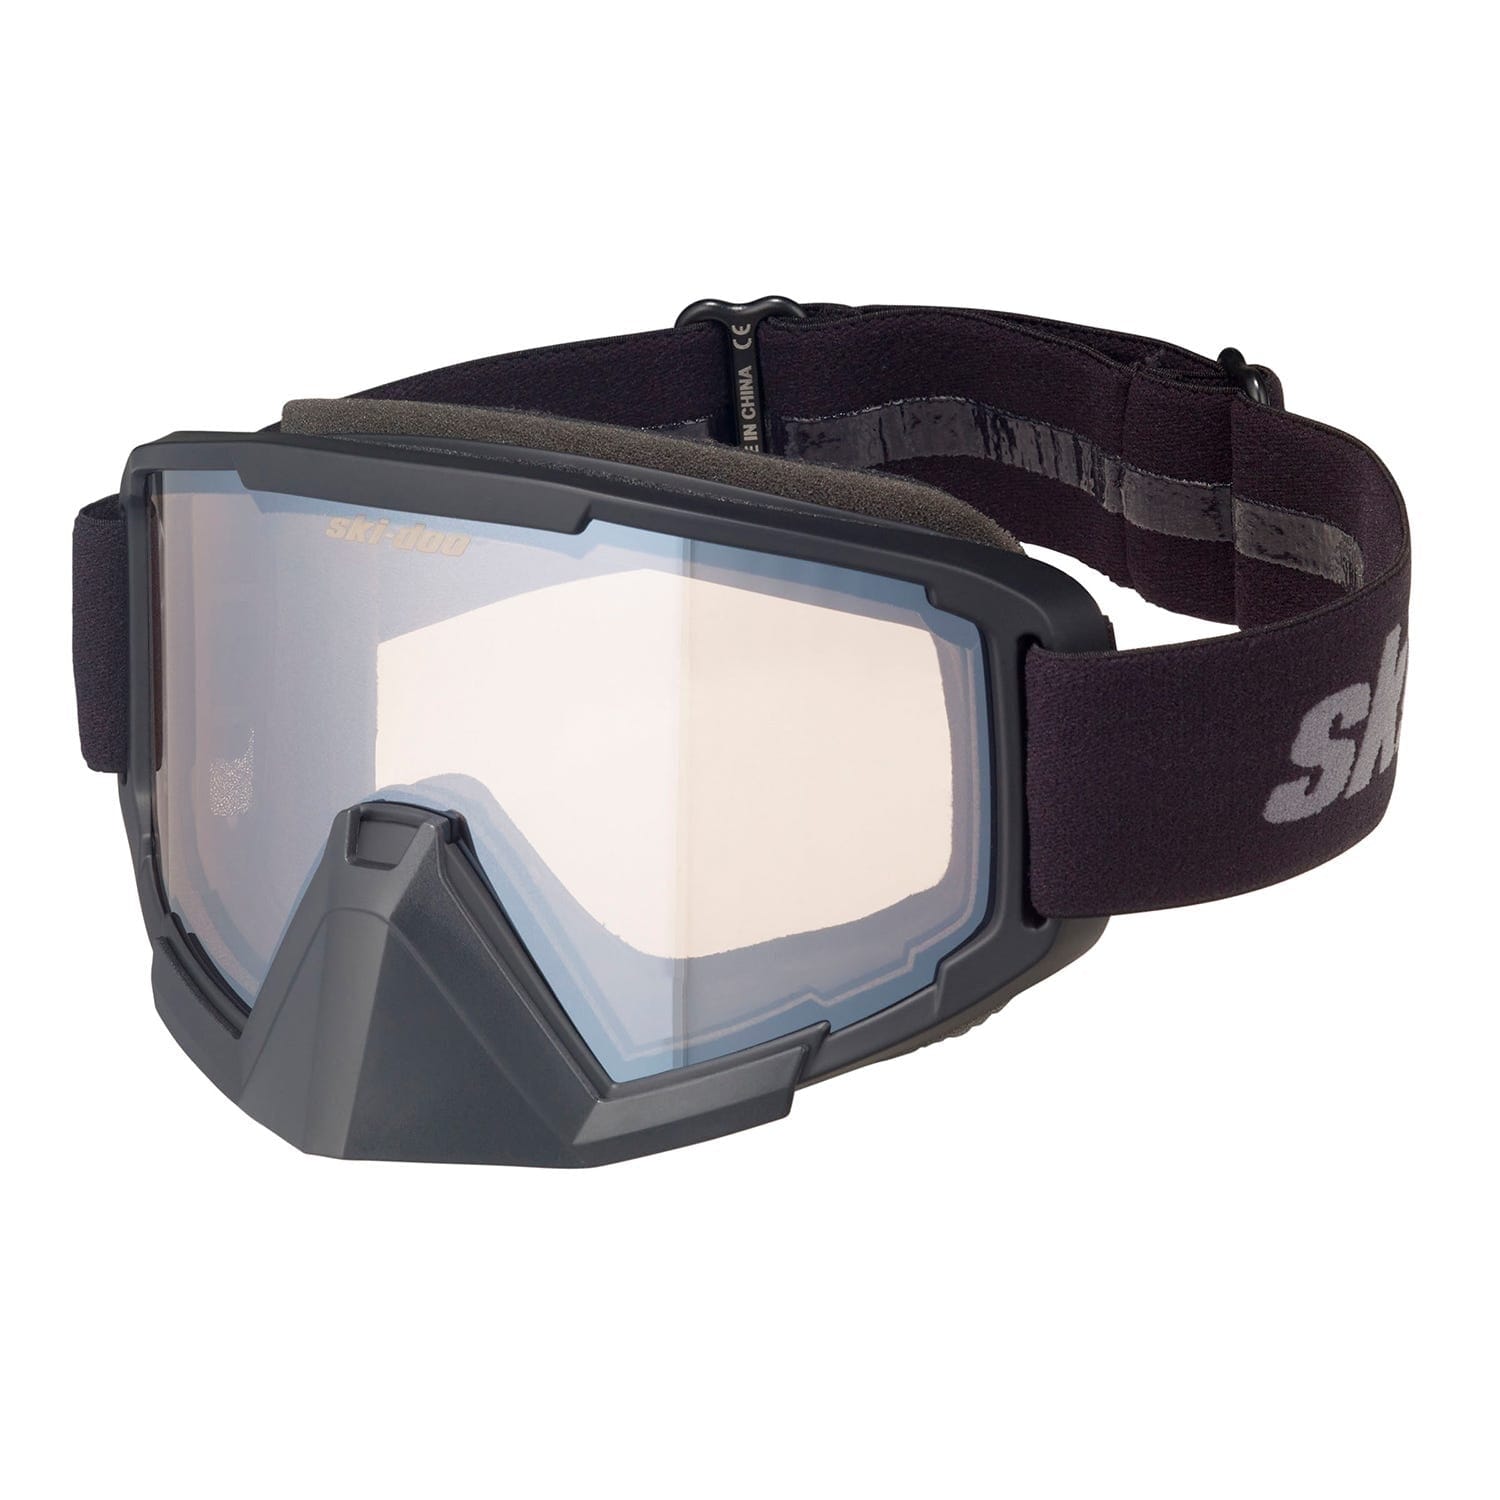 Ski-Doo Trench Goggles / Black / Onesize